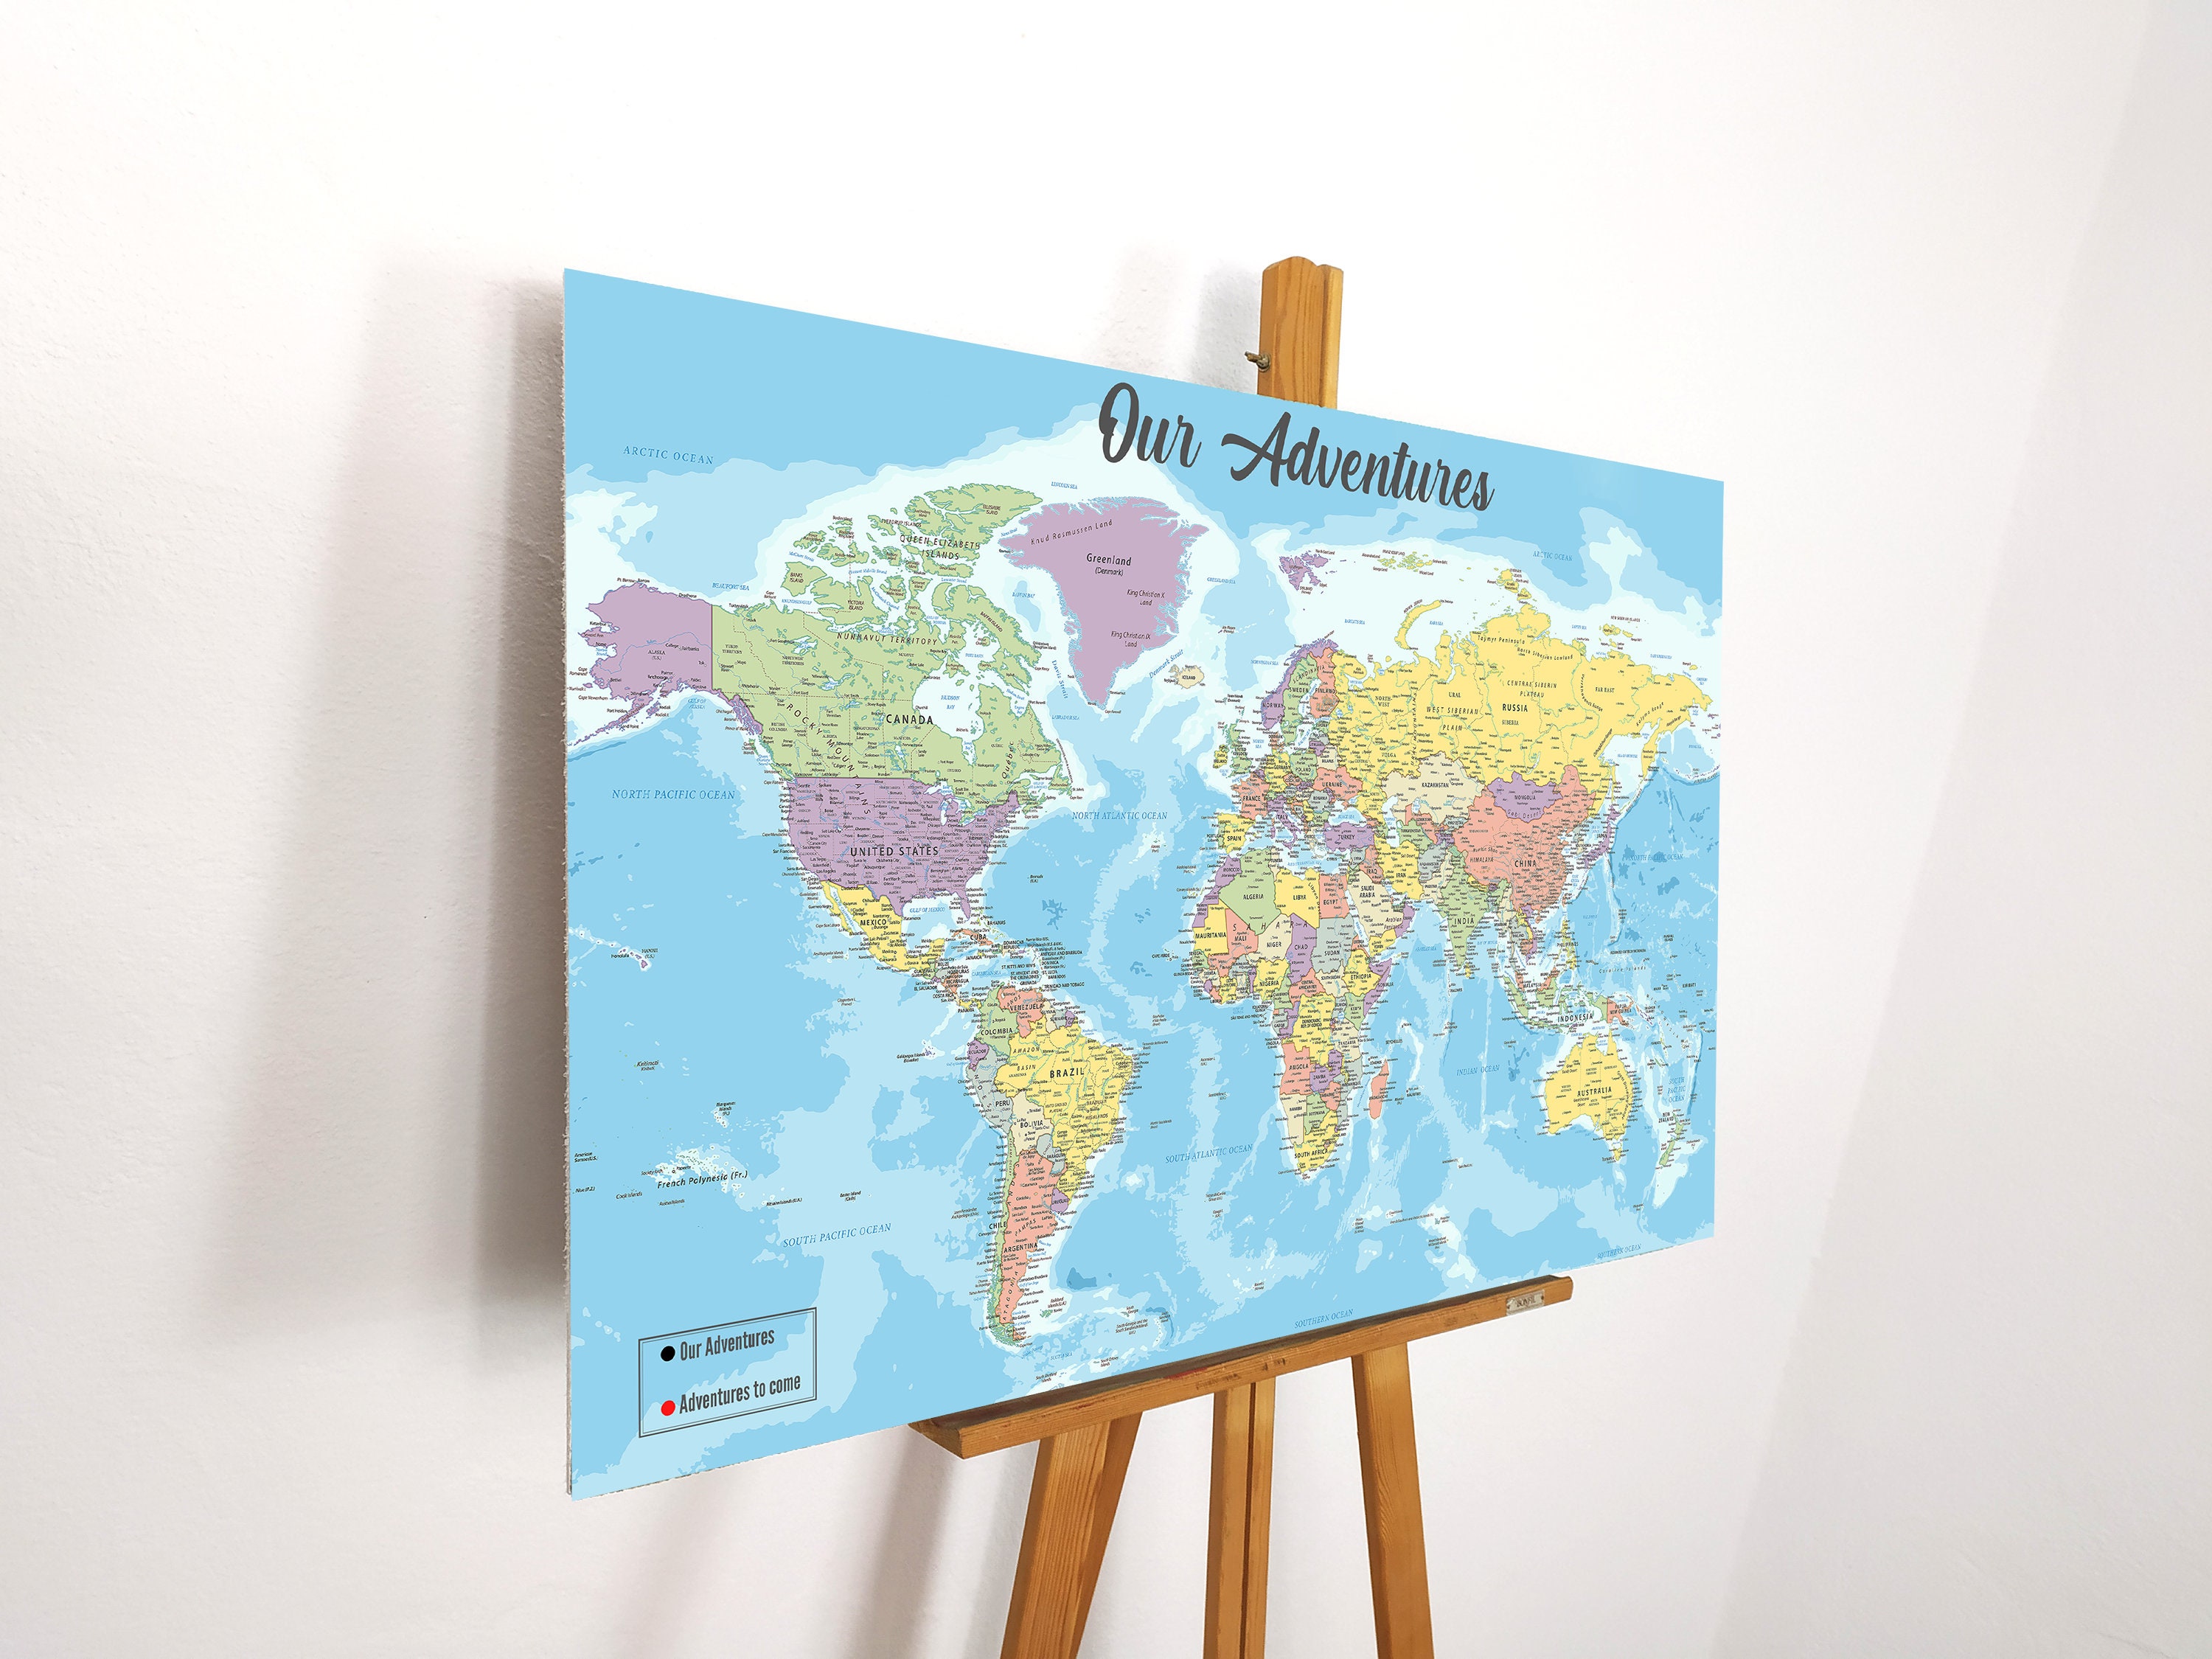 Push Pin World Map, Push Pin Map, World Map Pin Board, Cork World Map,  Weltkarte, Personalized Gift, Detailed Names, Beige 